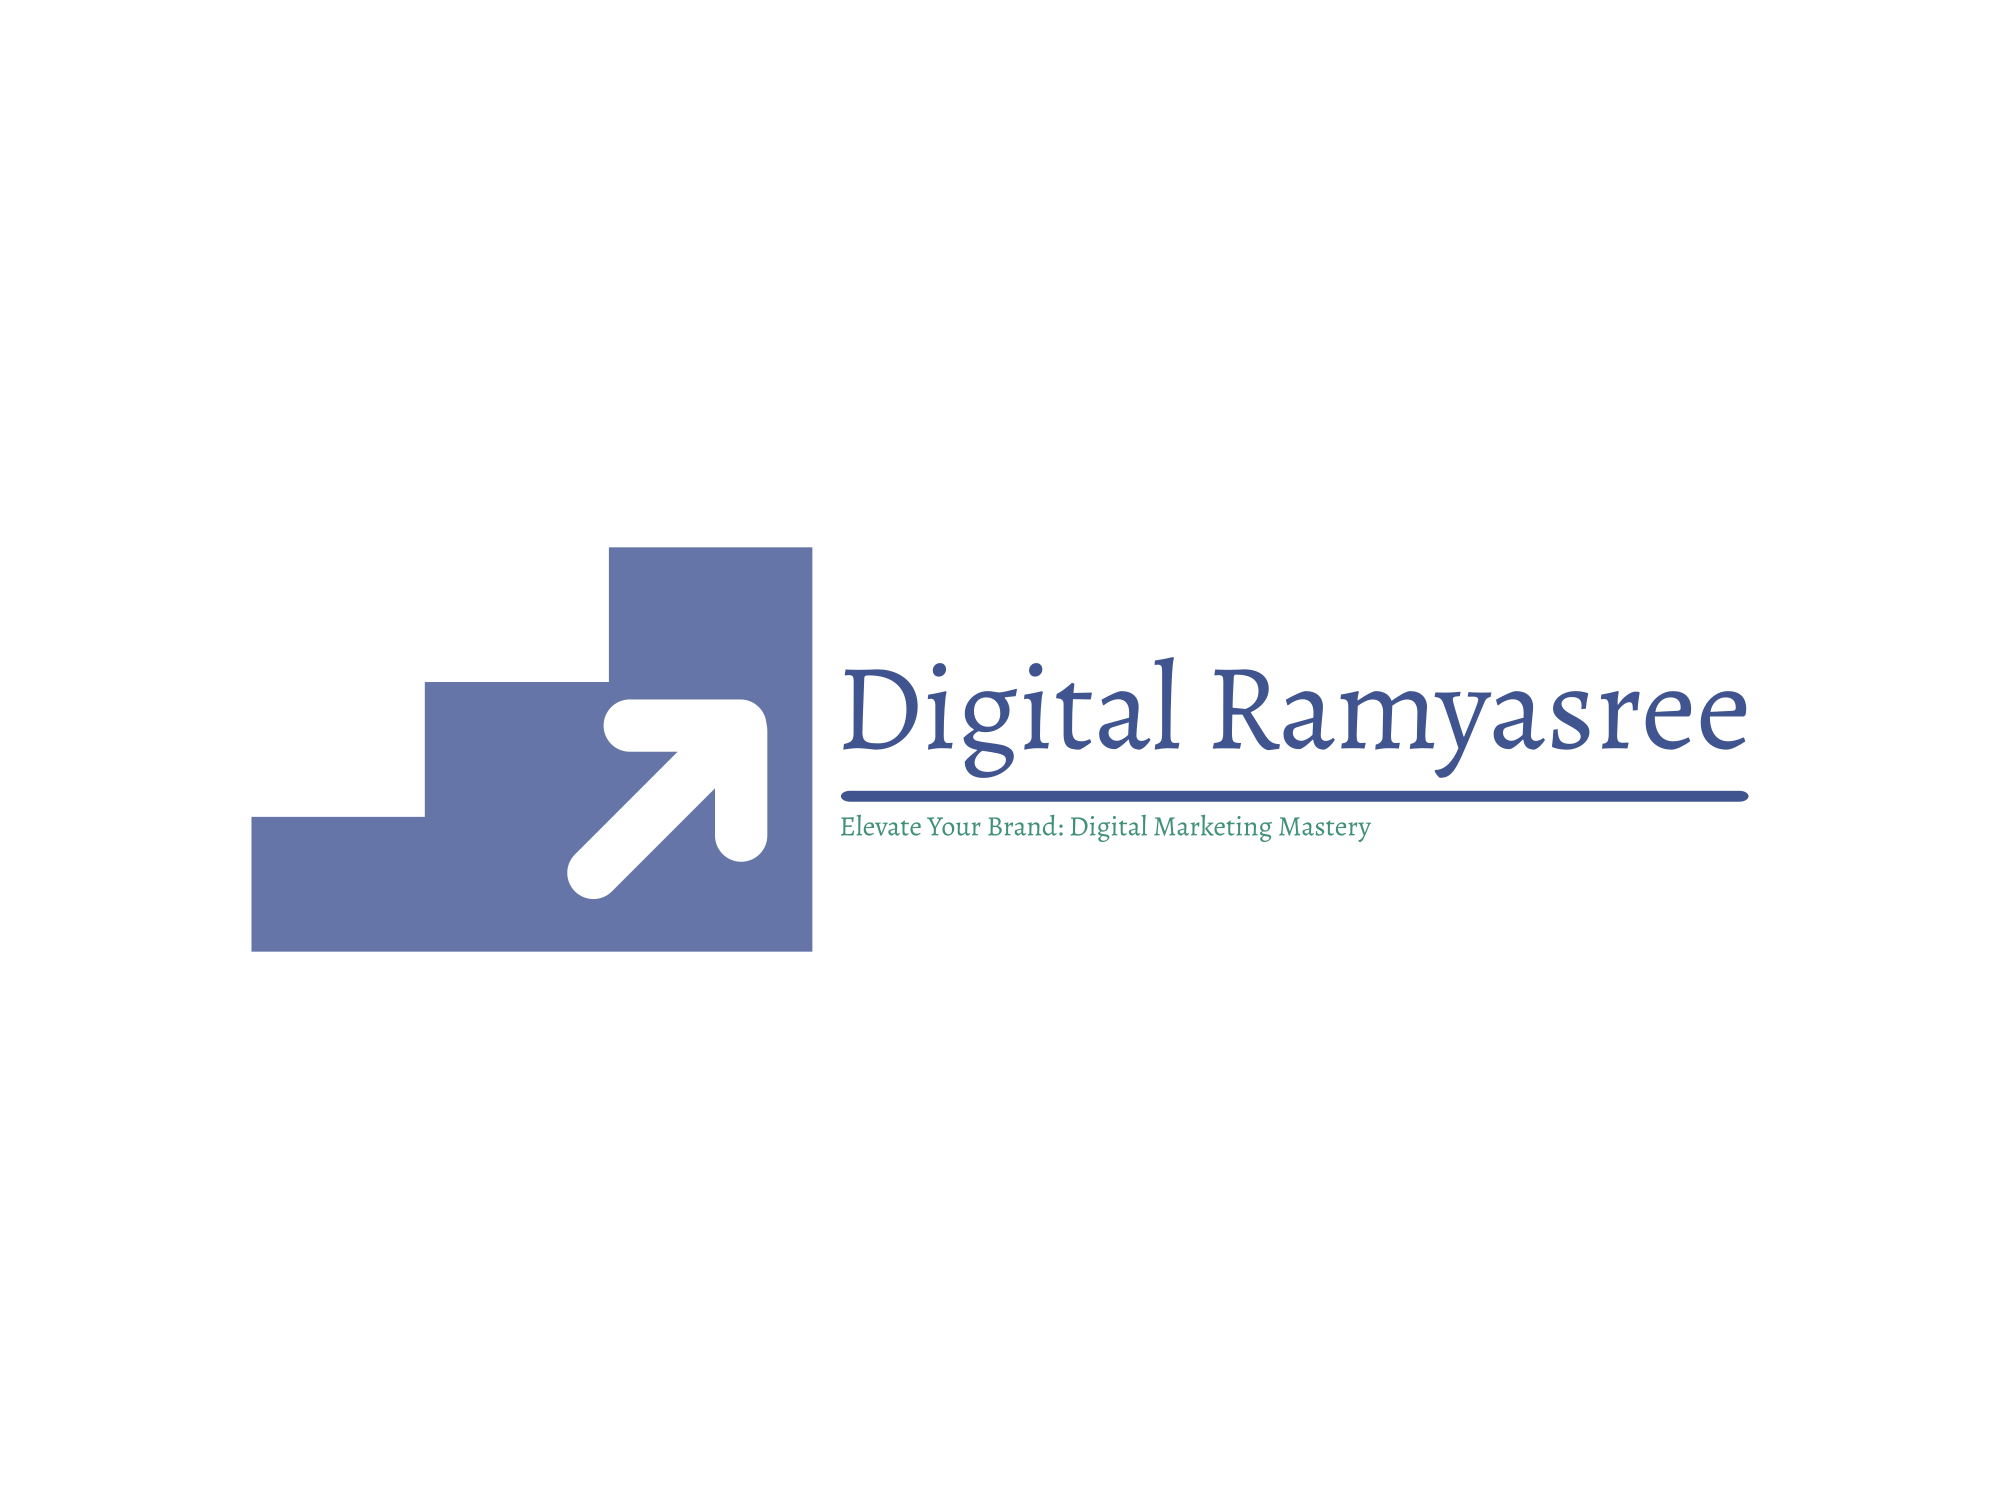 Ramyasree Avancha